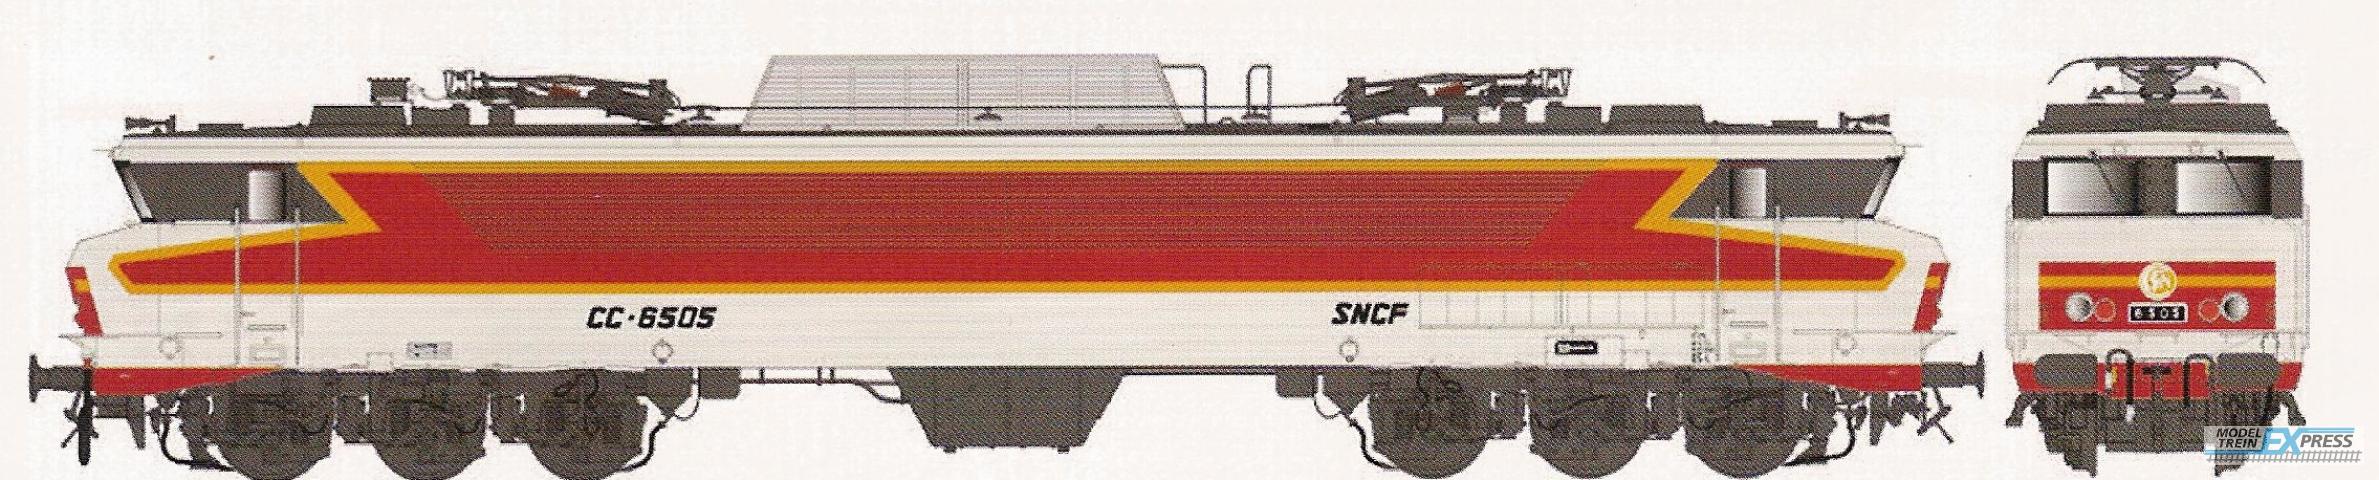 LS Models 10323S CC 6505, grijs/rood/oranje, TEE, platen, Beffara logo, zuidoost  /  Ep. IV  /  SNCF  /  HO  /  DC SOUND  /  1 P.